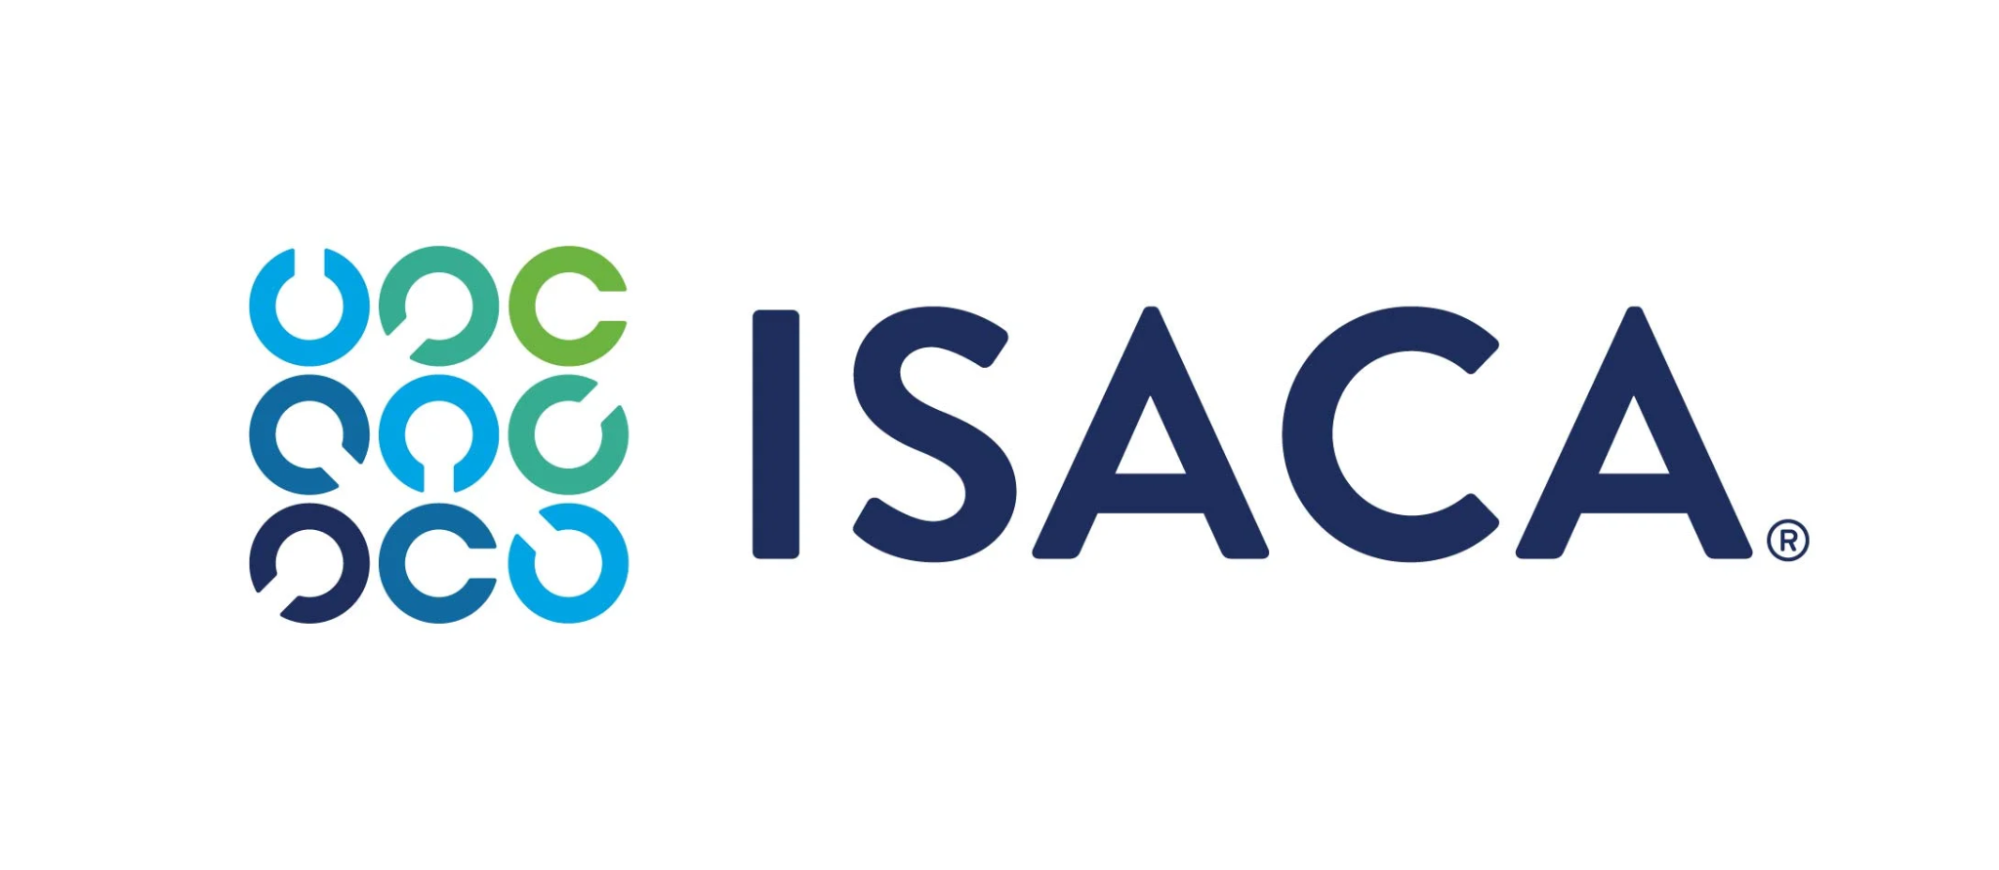 The ISACA logo 